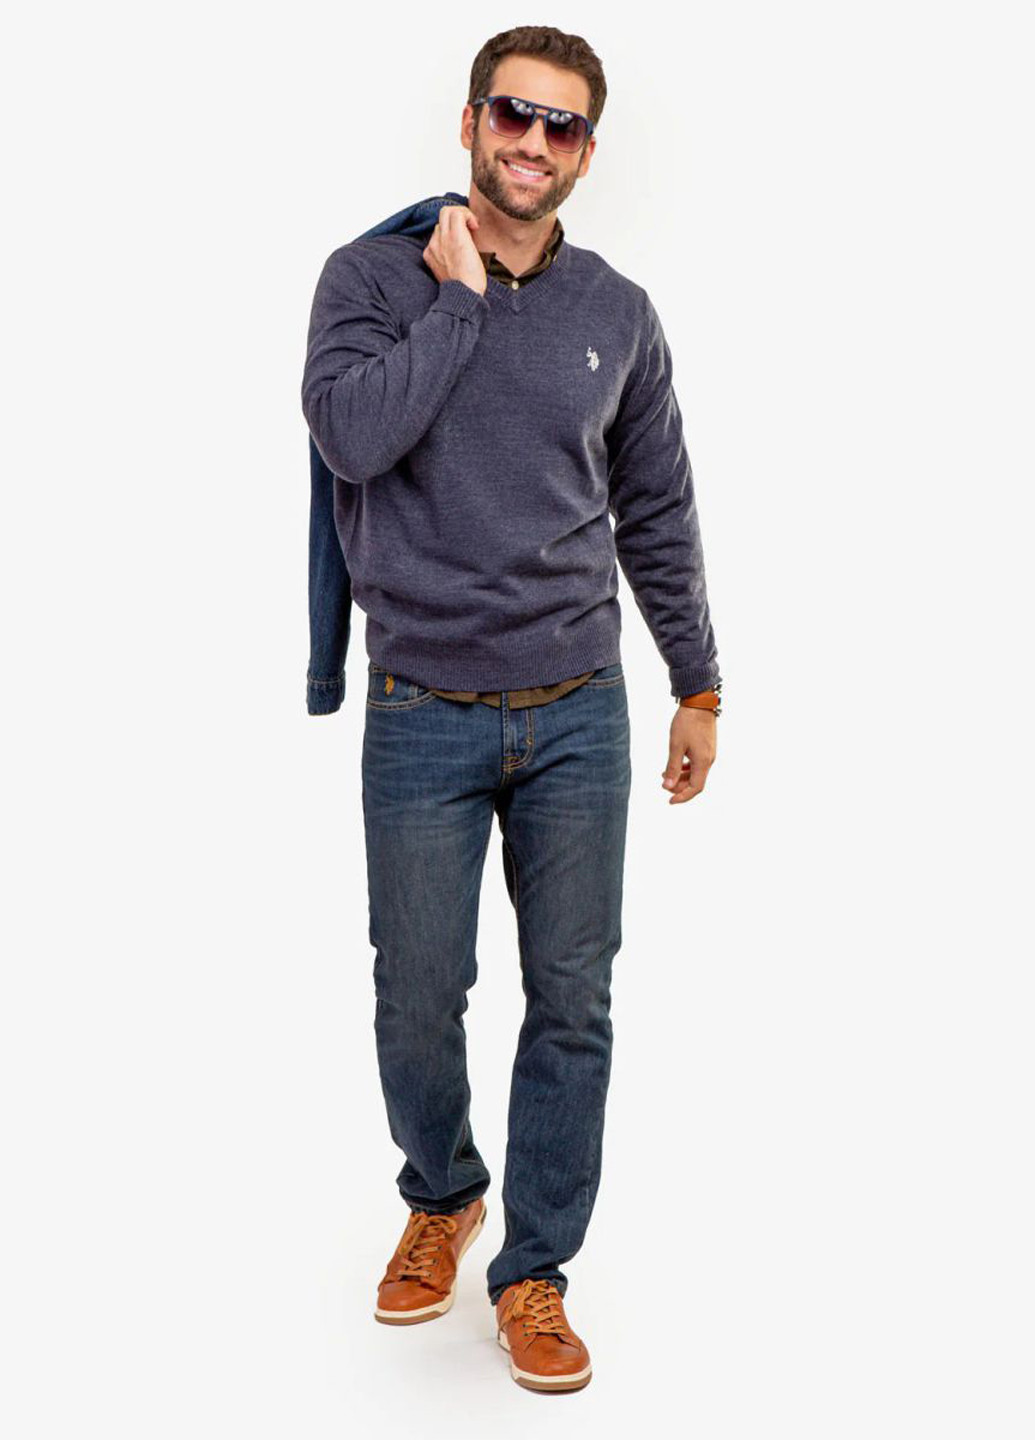 Темно-синий демисезонный пуловер пуловер U.S. Polo Assn.